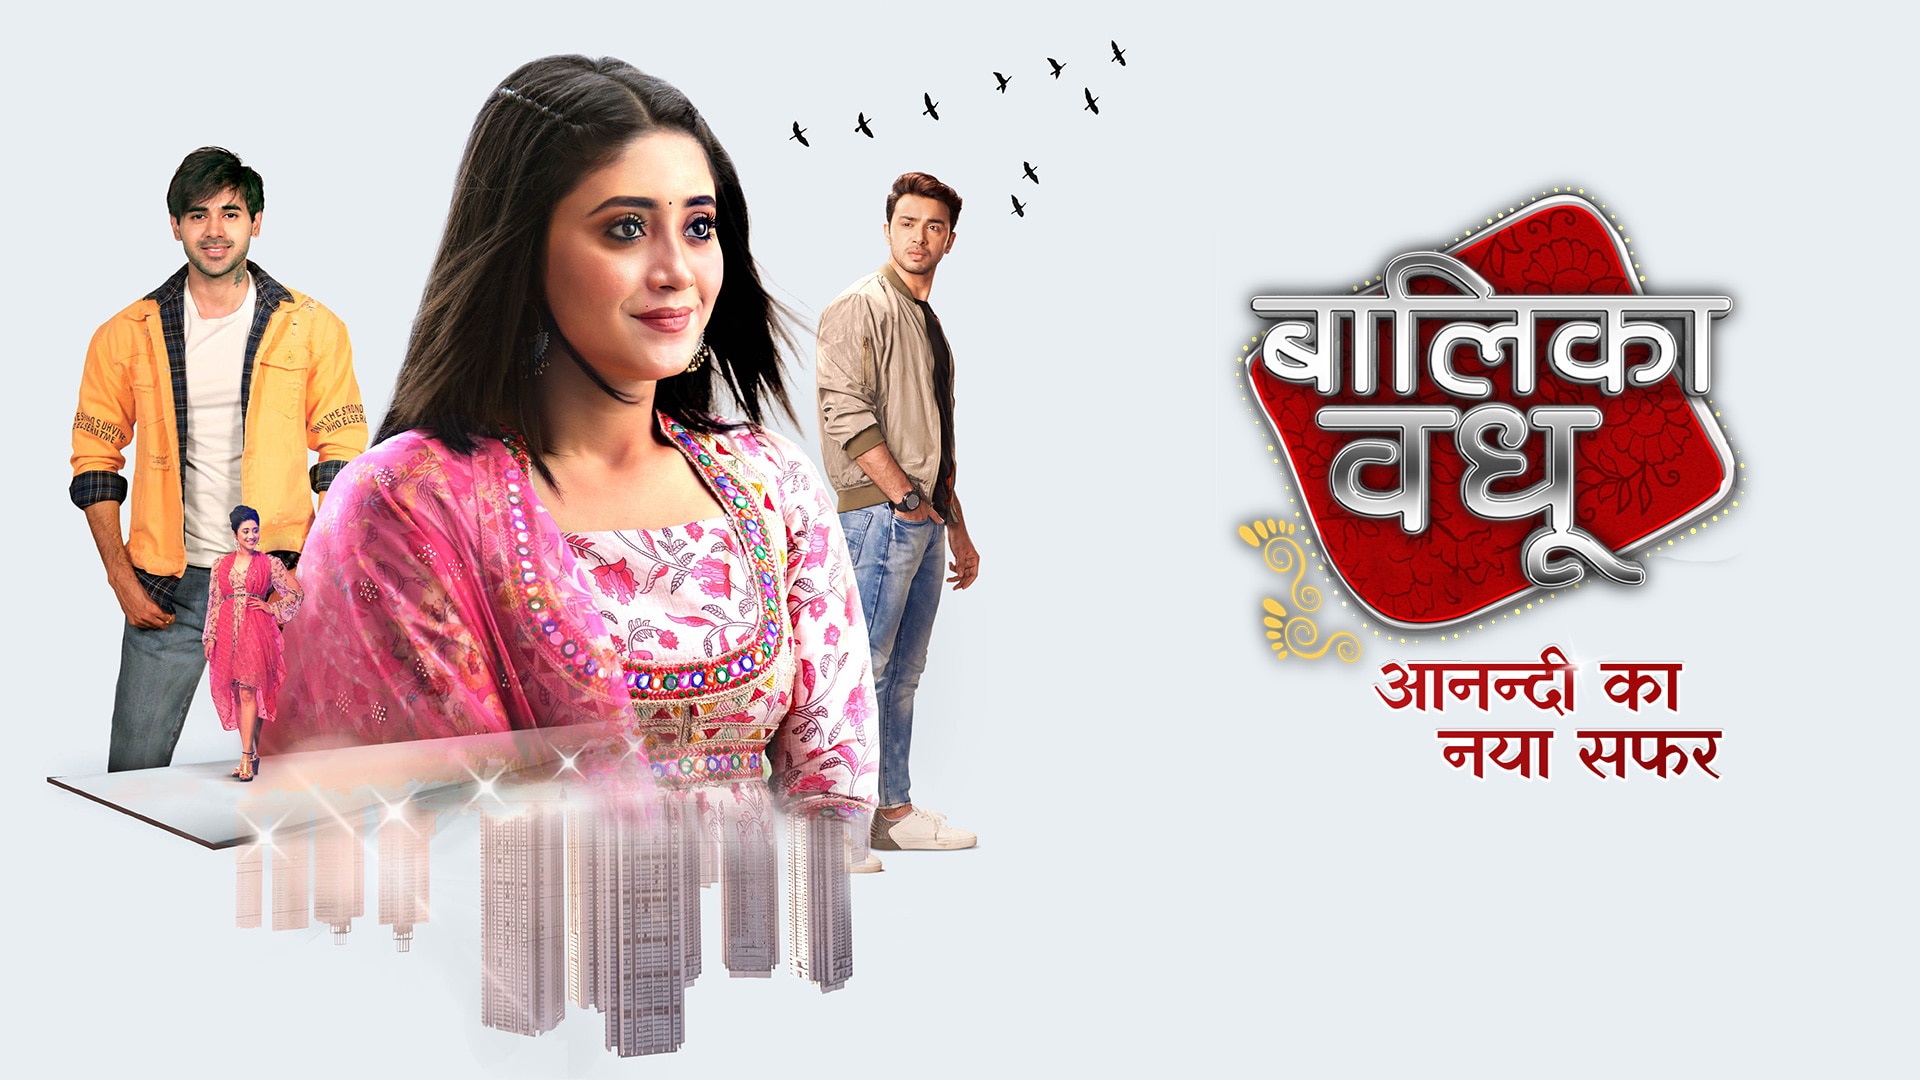 balika vadhu serial all episodes watch online